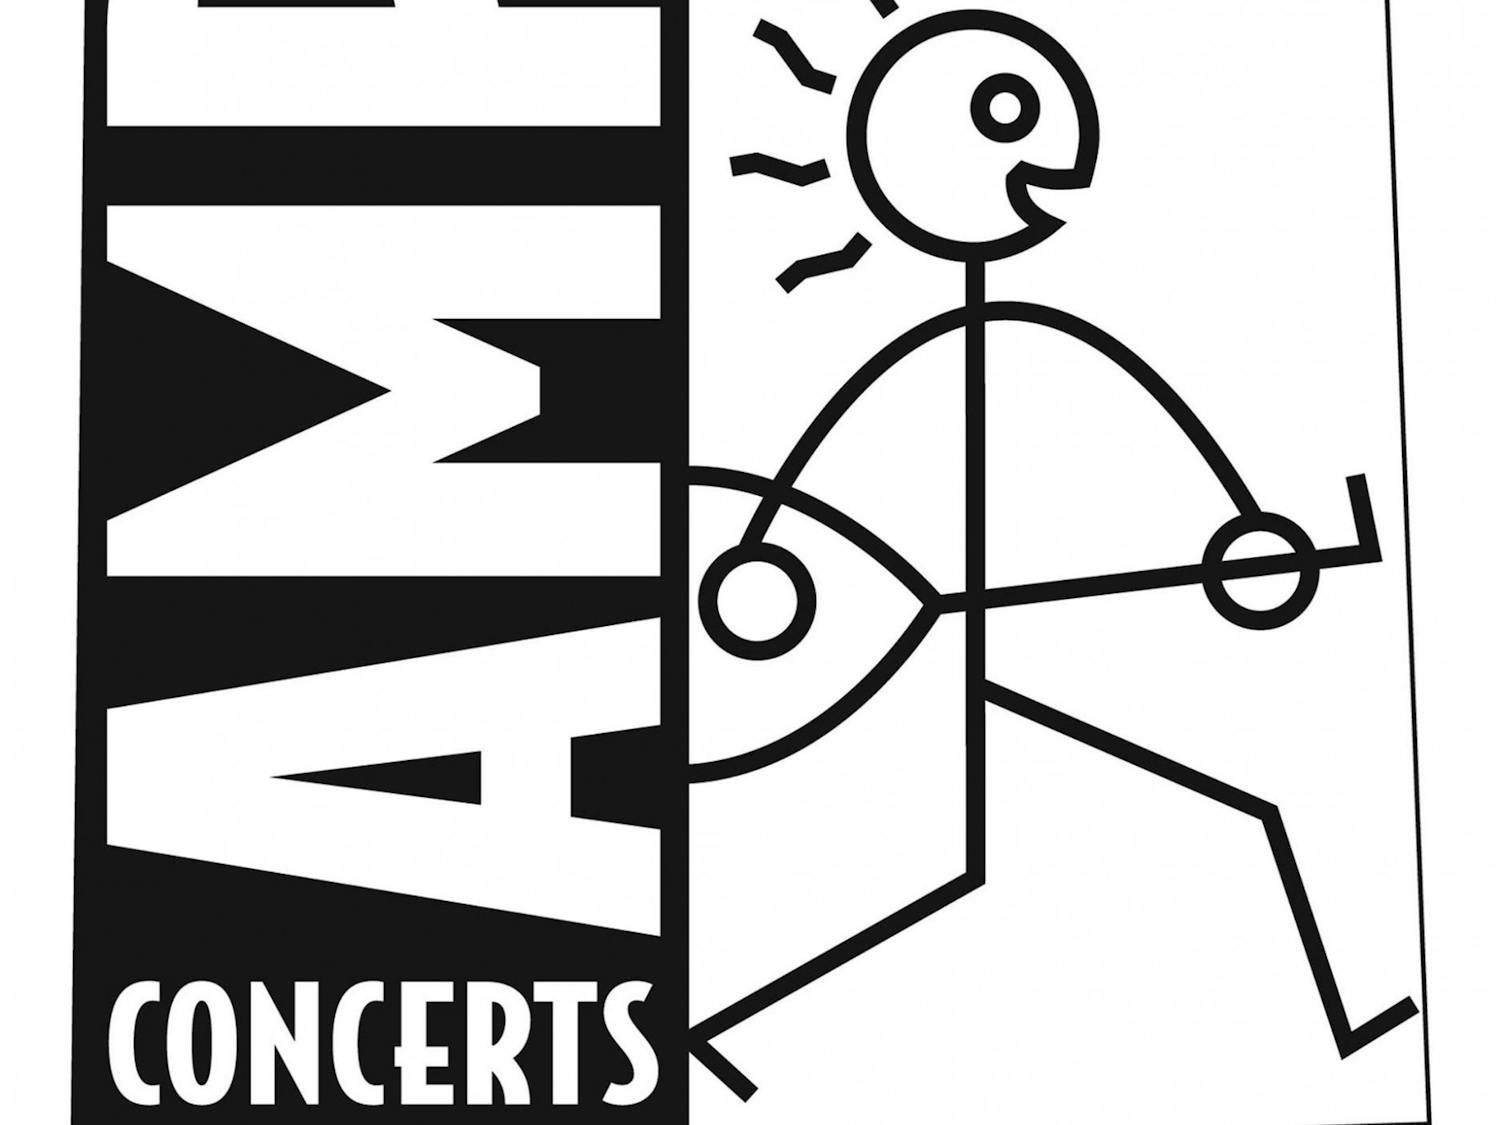 amp concerts.jpg